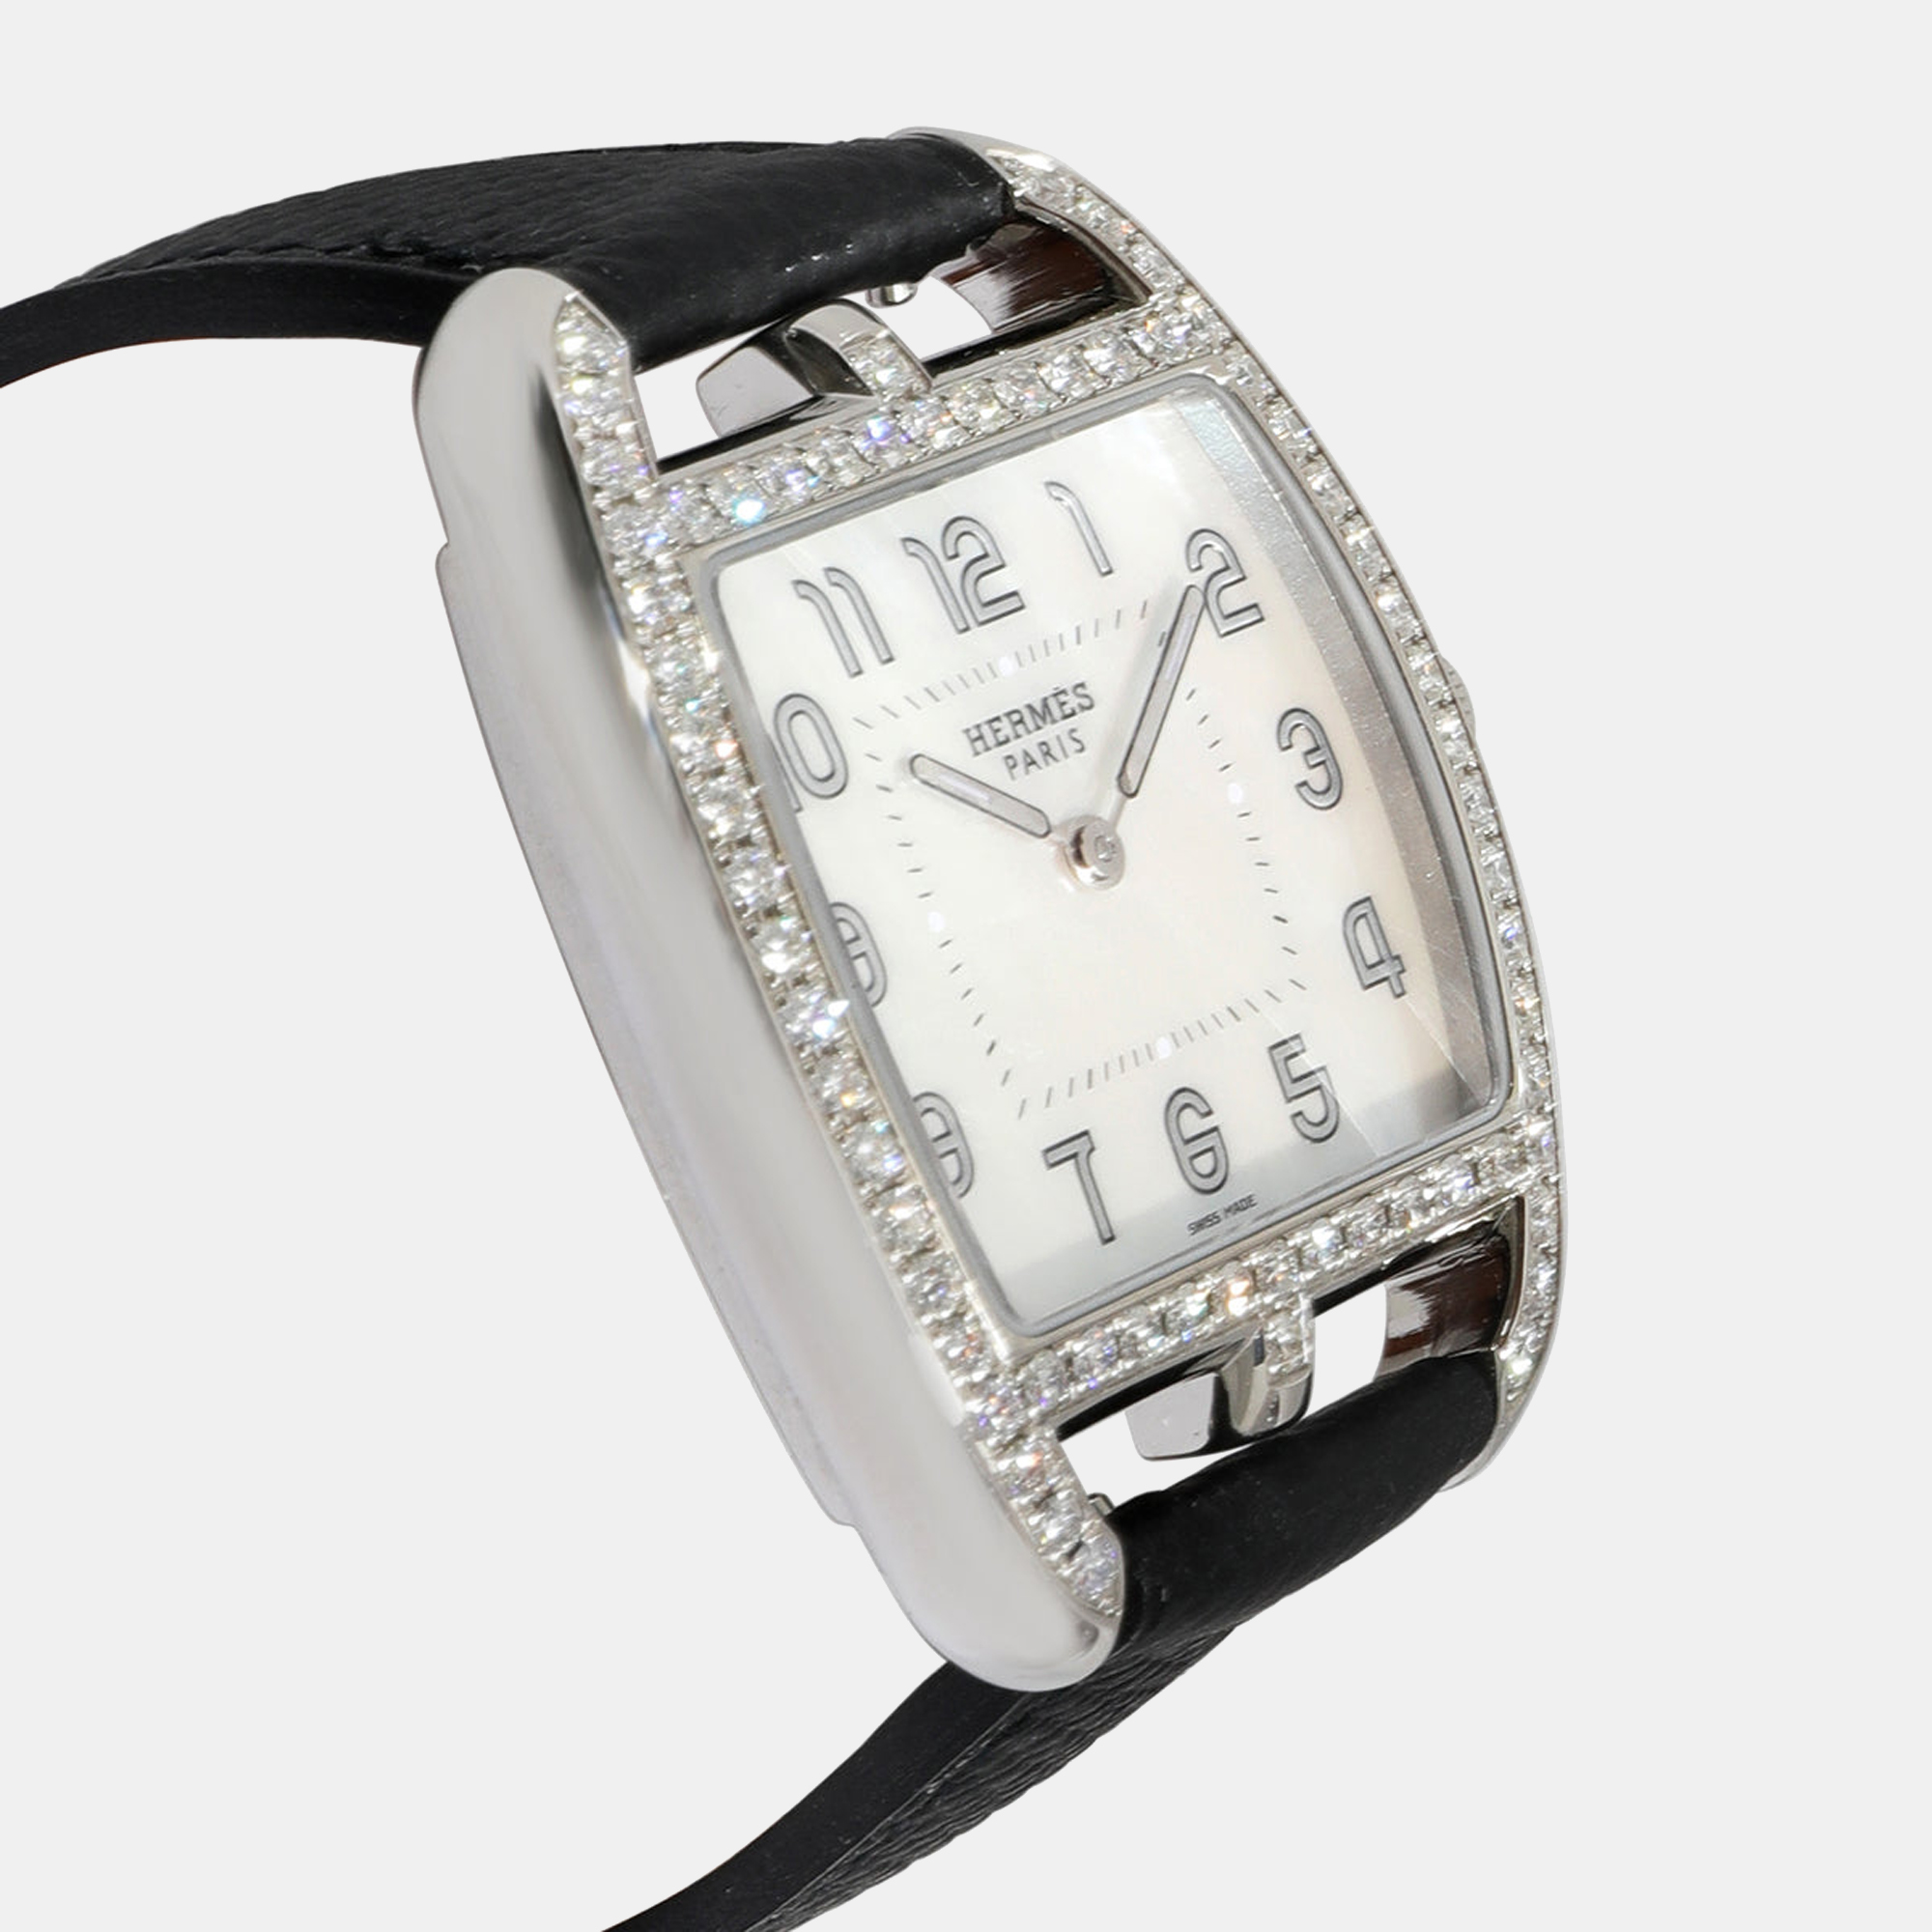 Hermes MOP Diamonds Stainless Steel Cape Cod CT1.730.212.MNO Women's Wristwatch 33 Mm